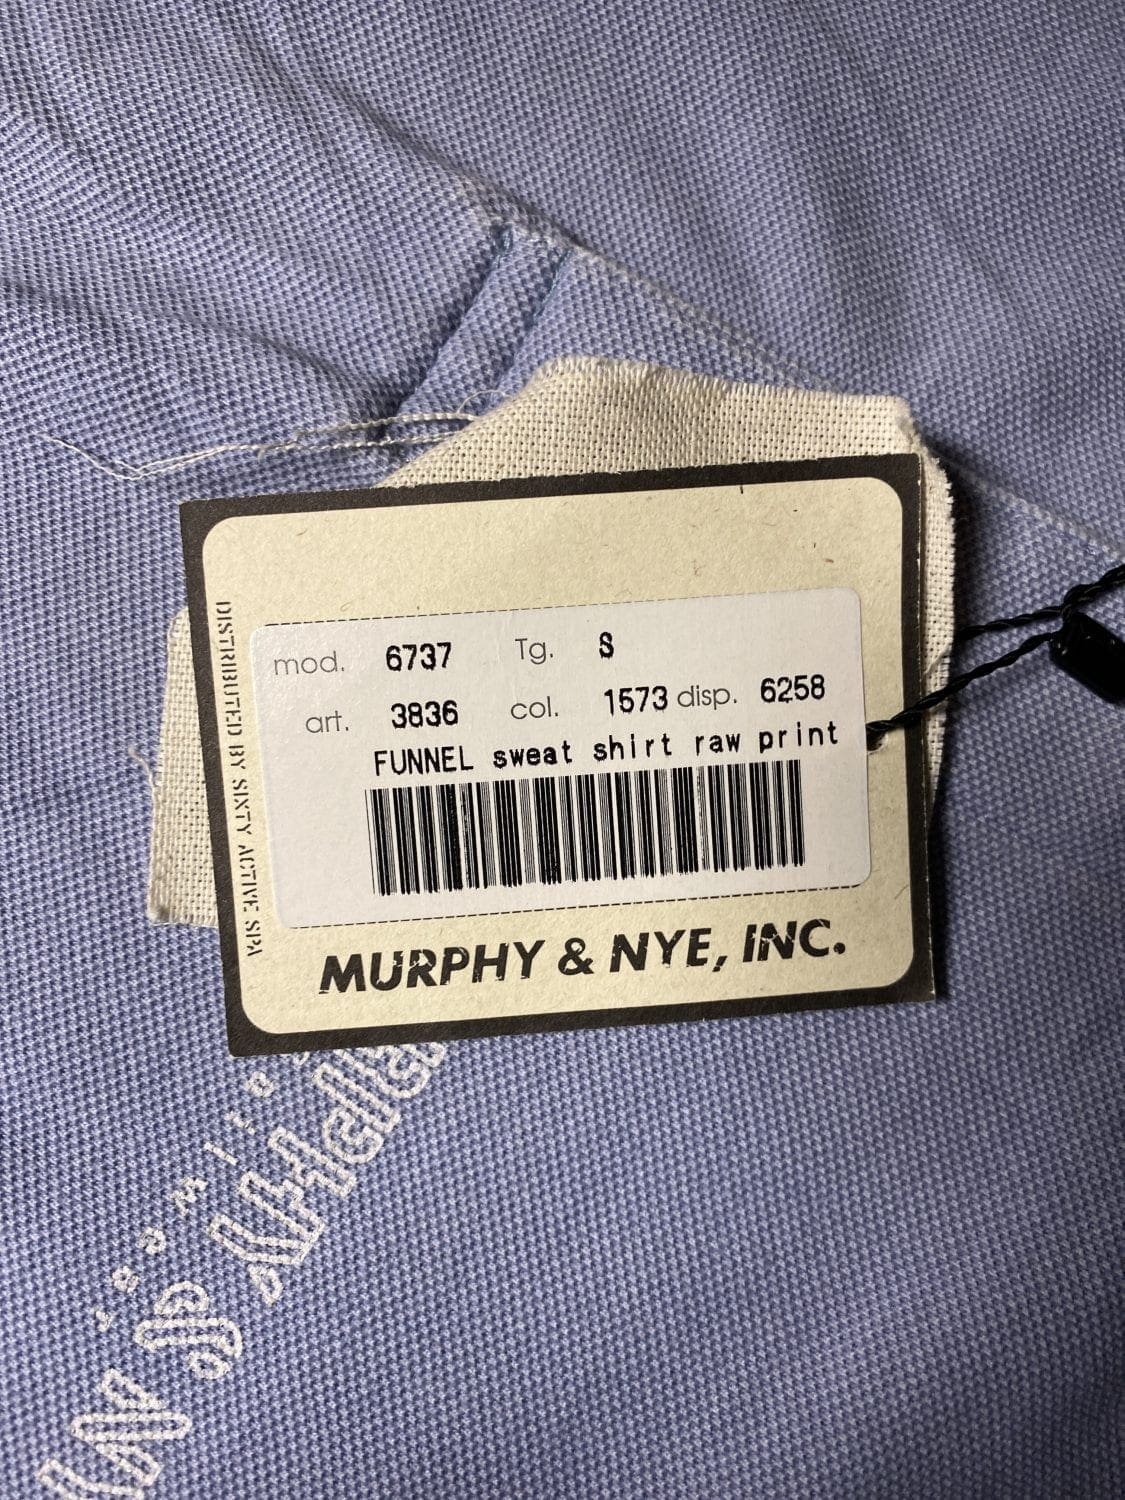 Murphy & Nye, Inc. Funnel Blue Sweatshirts - Boat Scrapyard